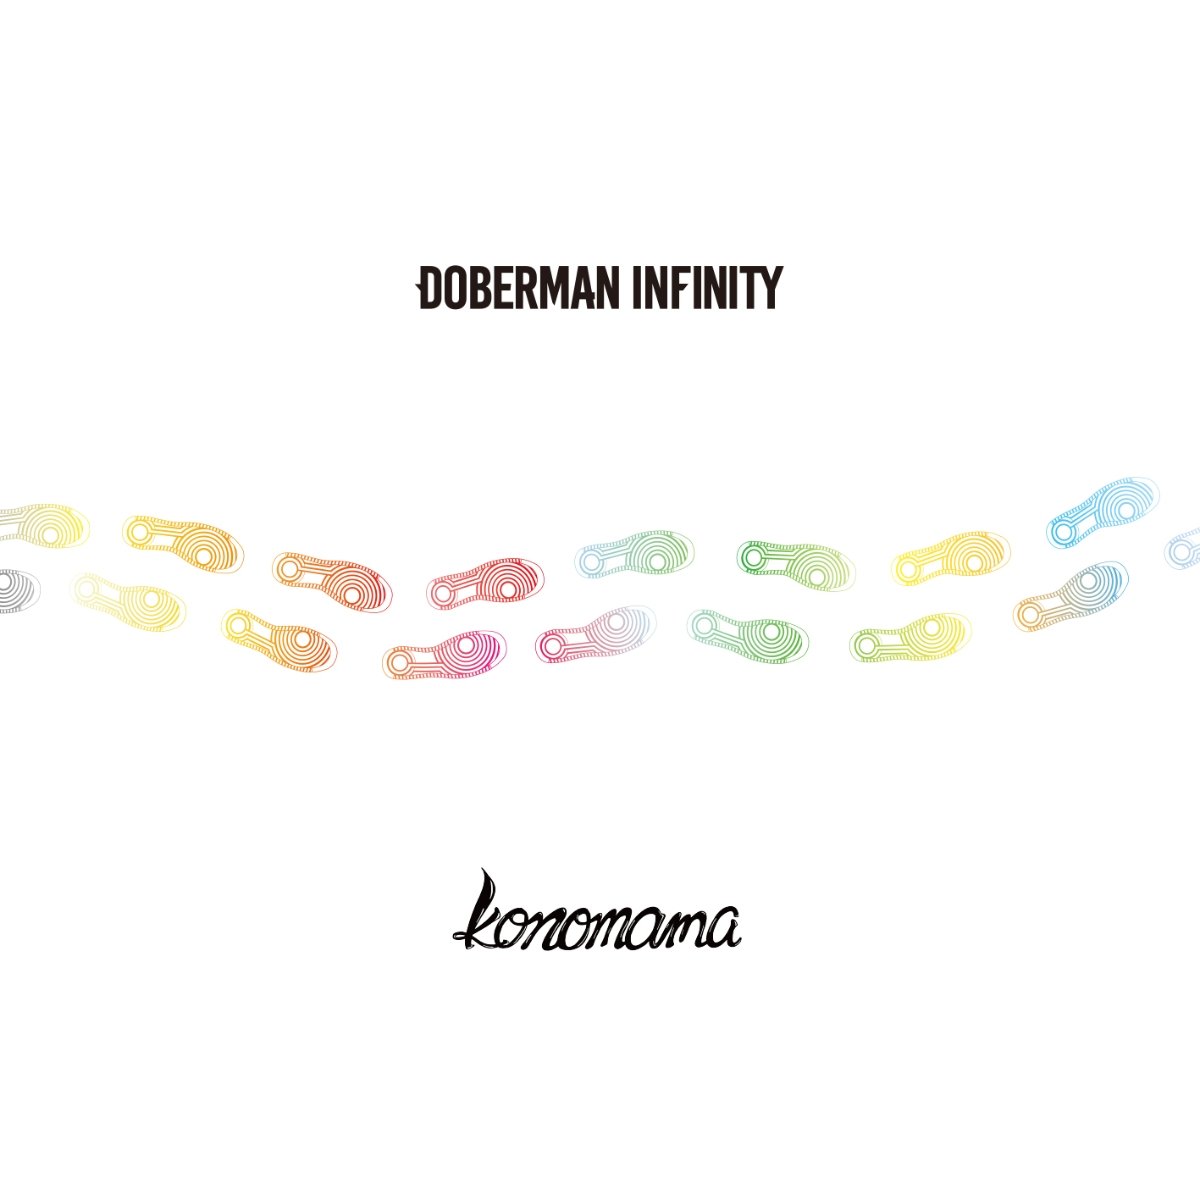 CD Shop - DOBERMAN INFINITY KONOMAMA